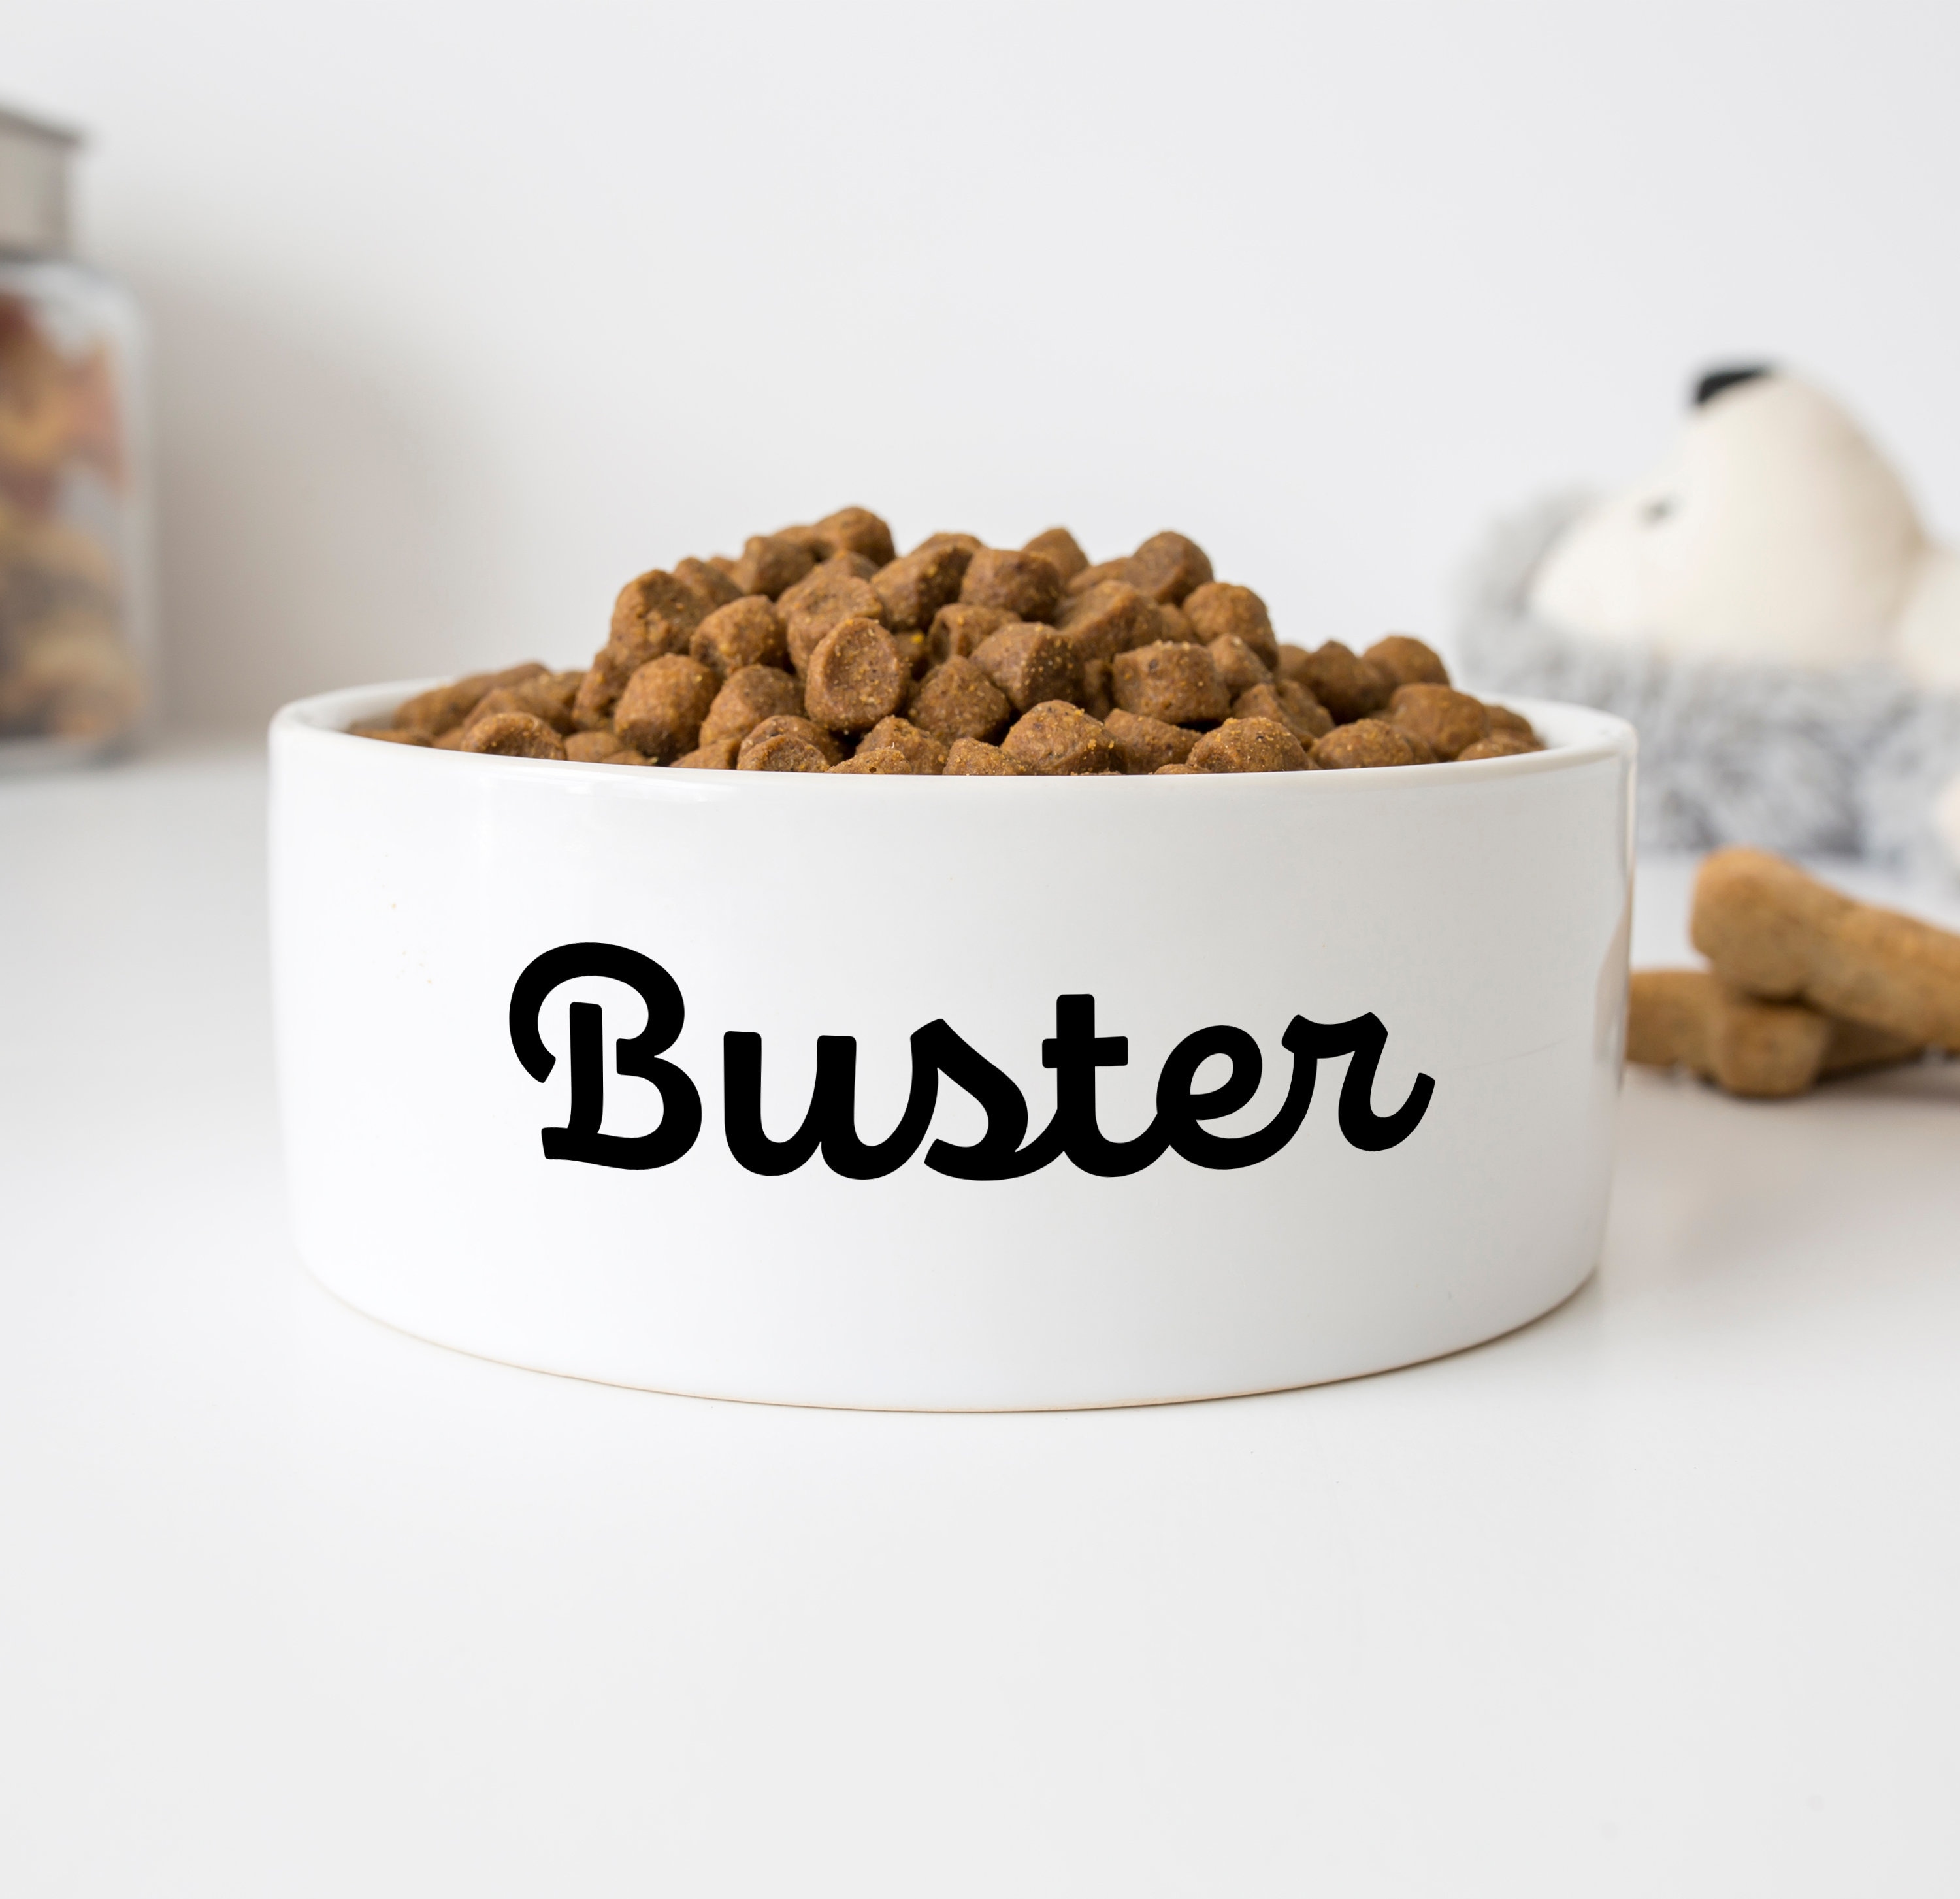 Nihow Dog Food & Water Bowl Set: Elevated Ceramic Dog Bowls for  Medium/Small Size Dog - Food Safe Raised Puppy Bowls - Vivid Blue Pet Bowl  for